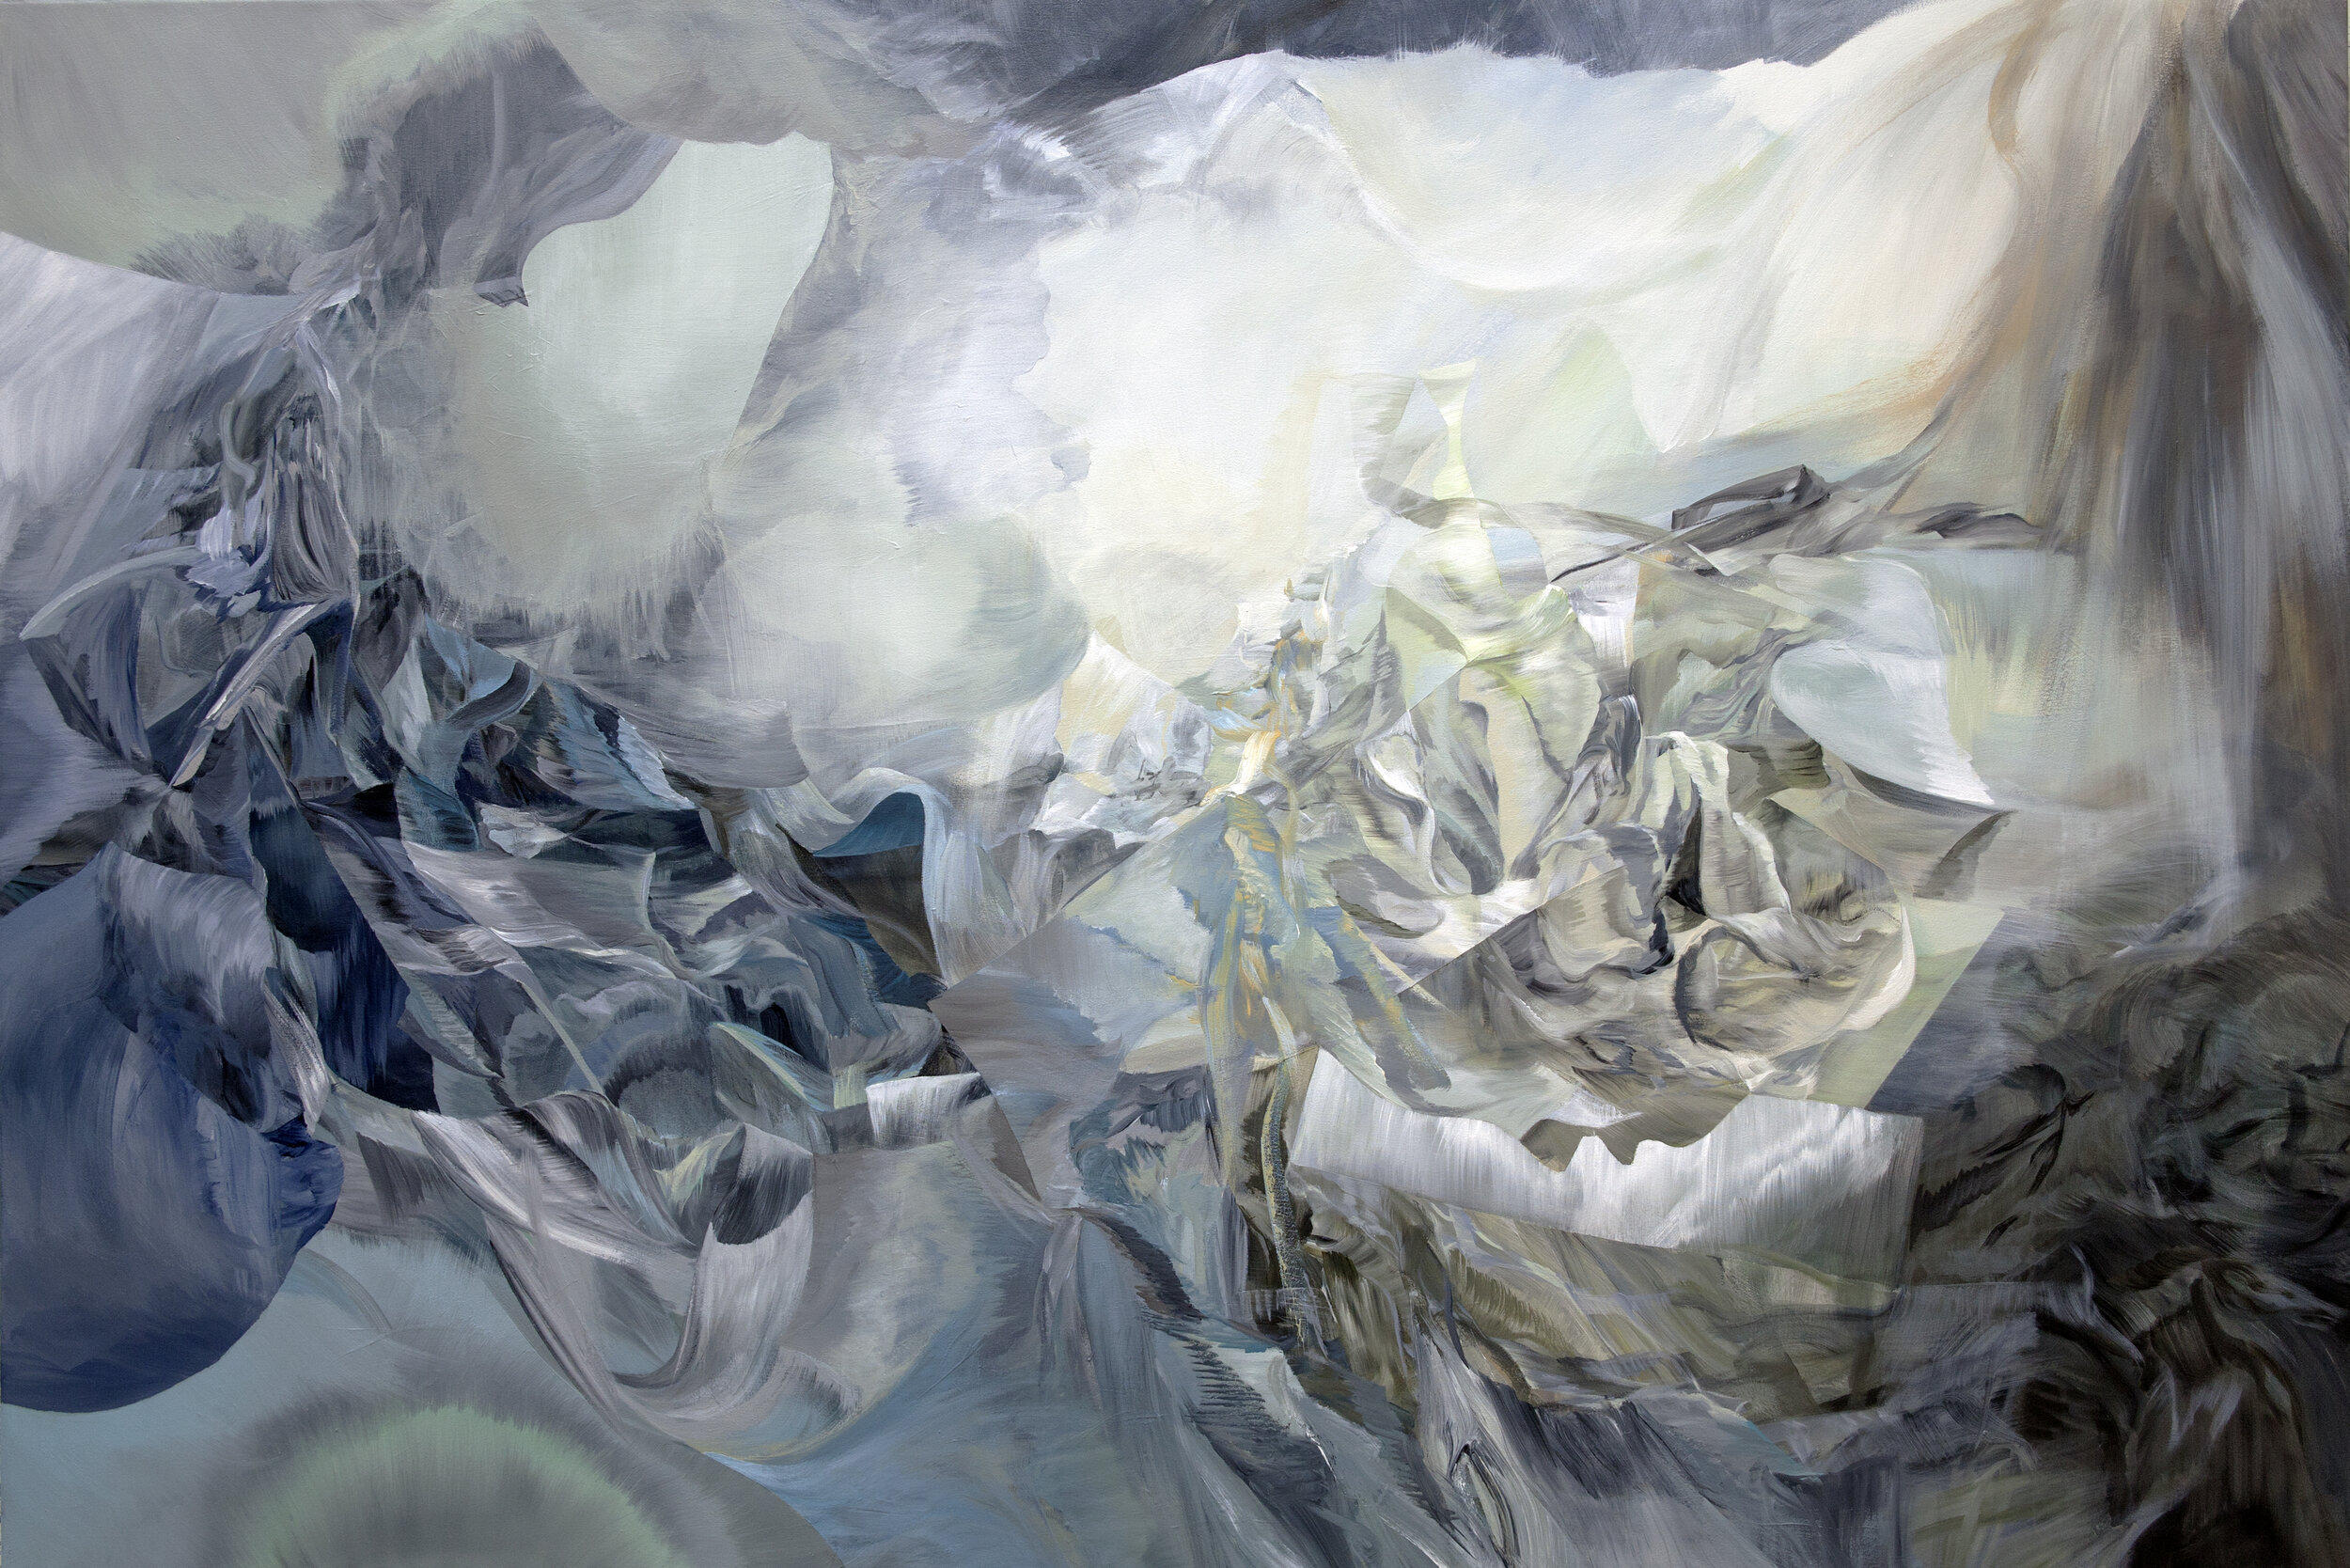   Stone Cirque / Phantoms of a Thousand Hours   acrylic on canvas  47” x 70 